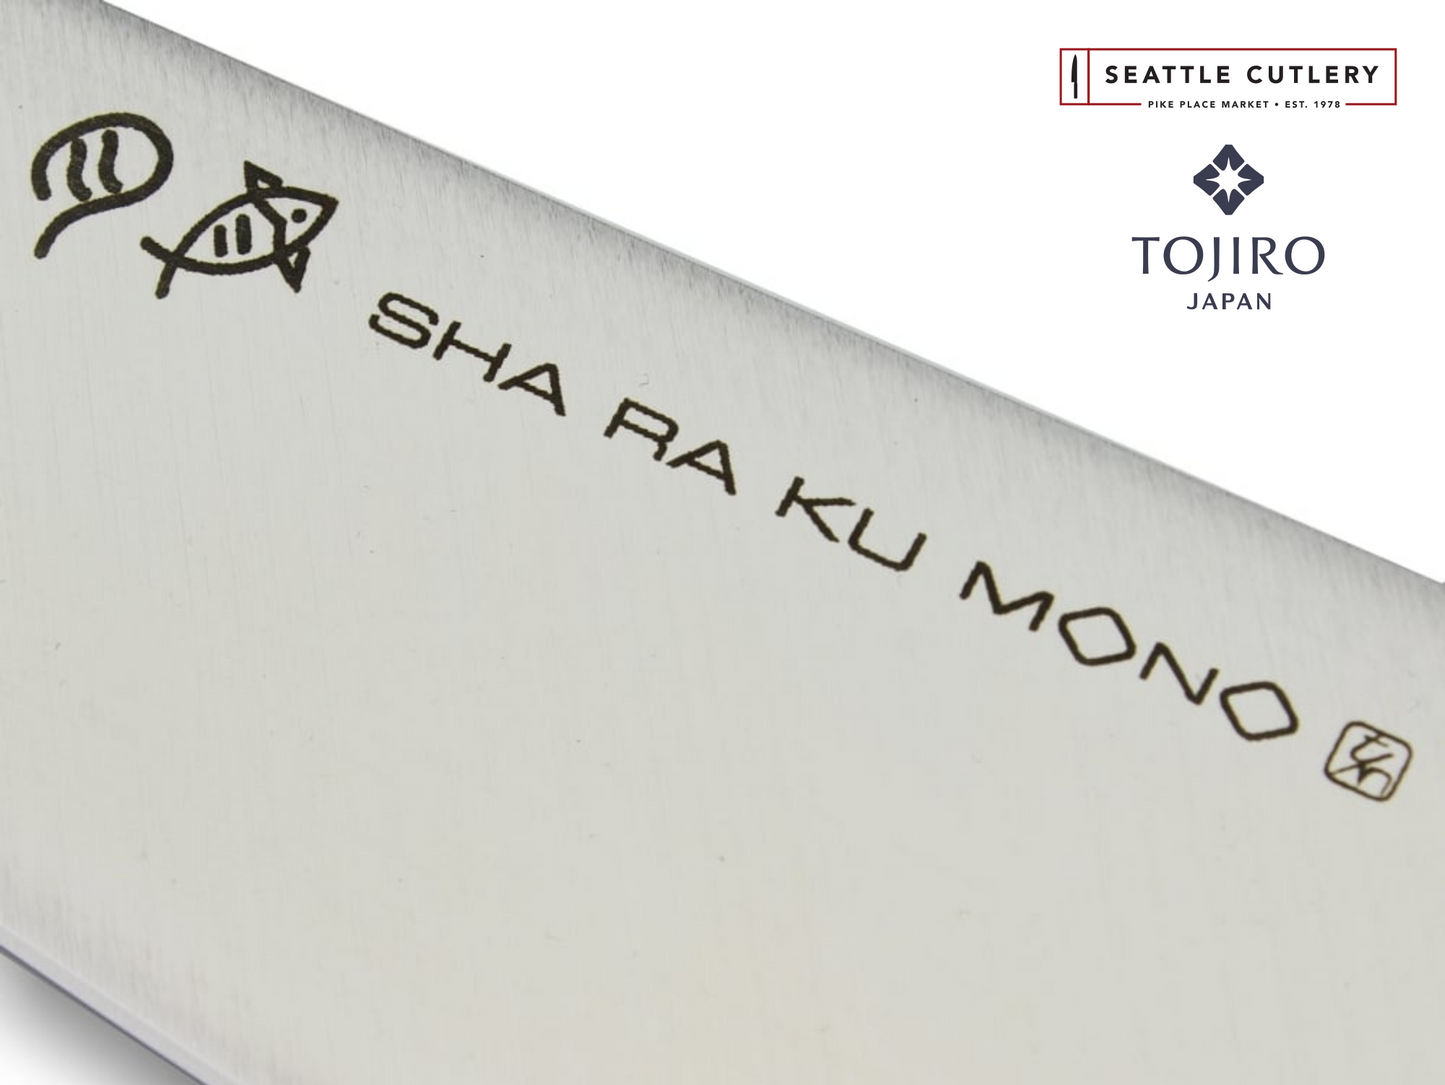 Sha Ra Ku Mono Peeling Knife